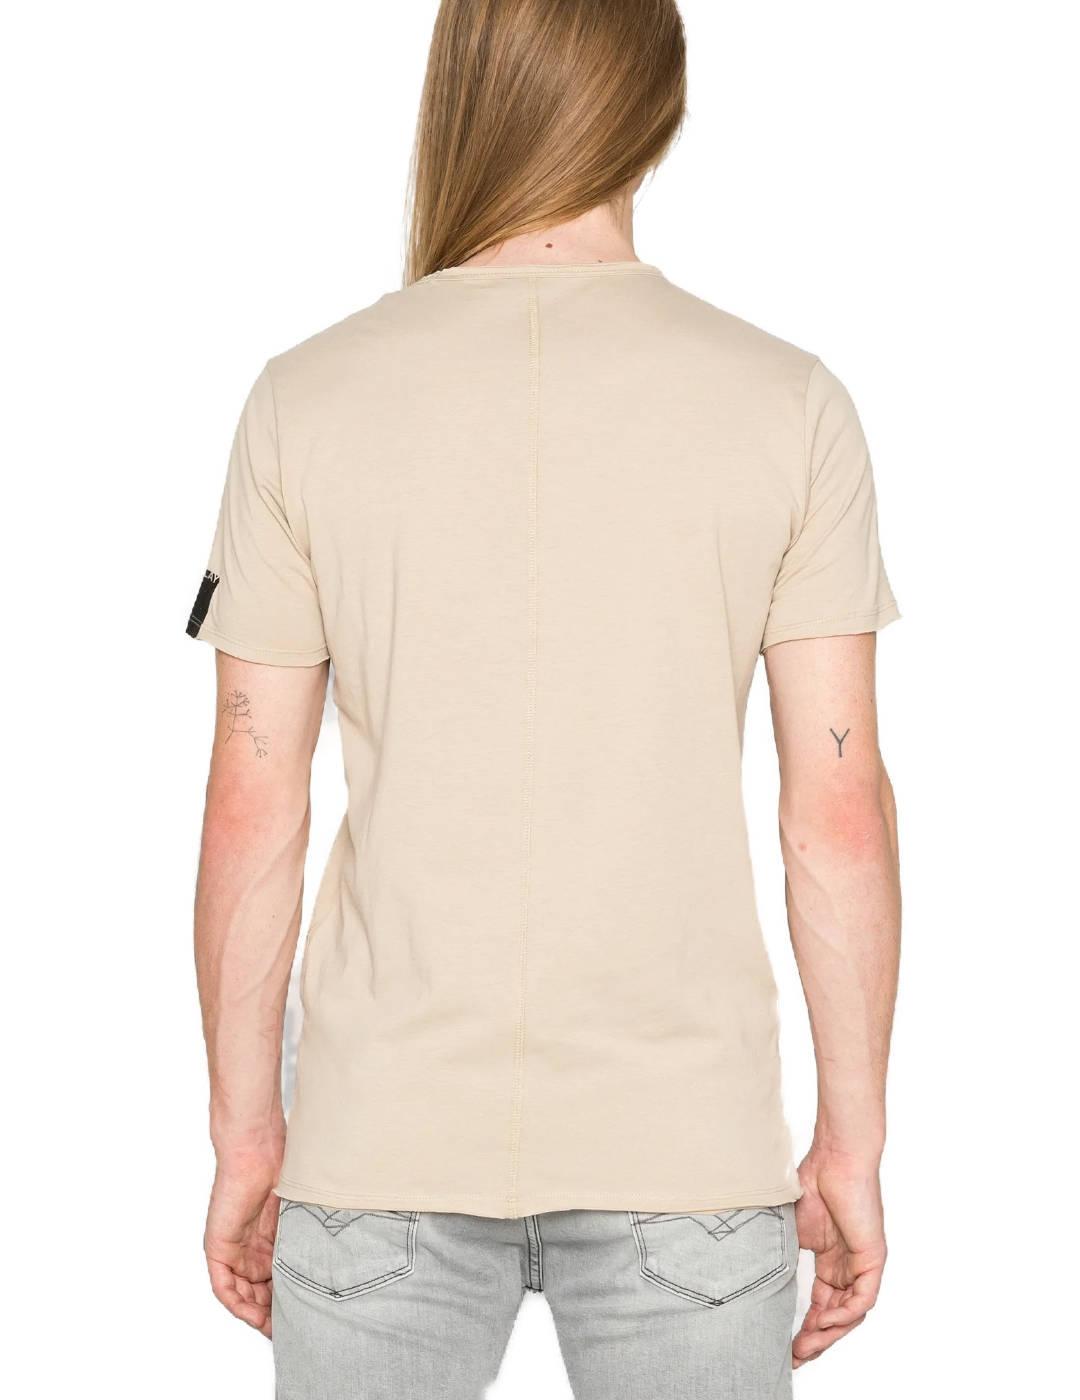 Camiseta Replay de manga corta color beige de hombre